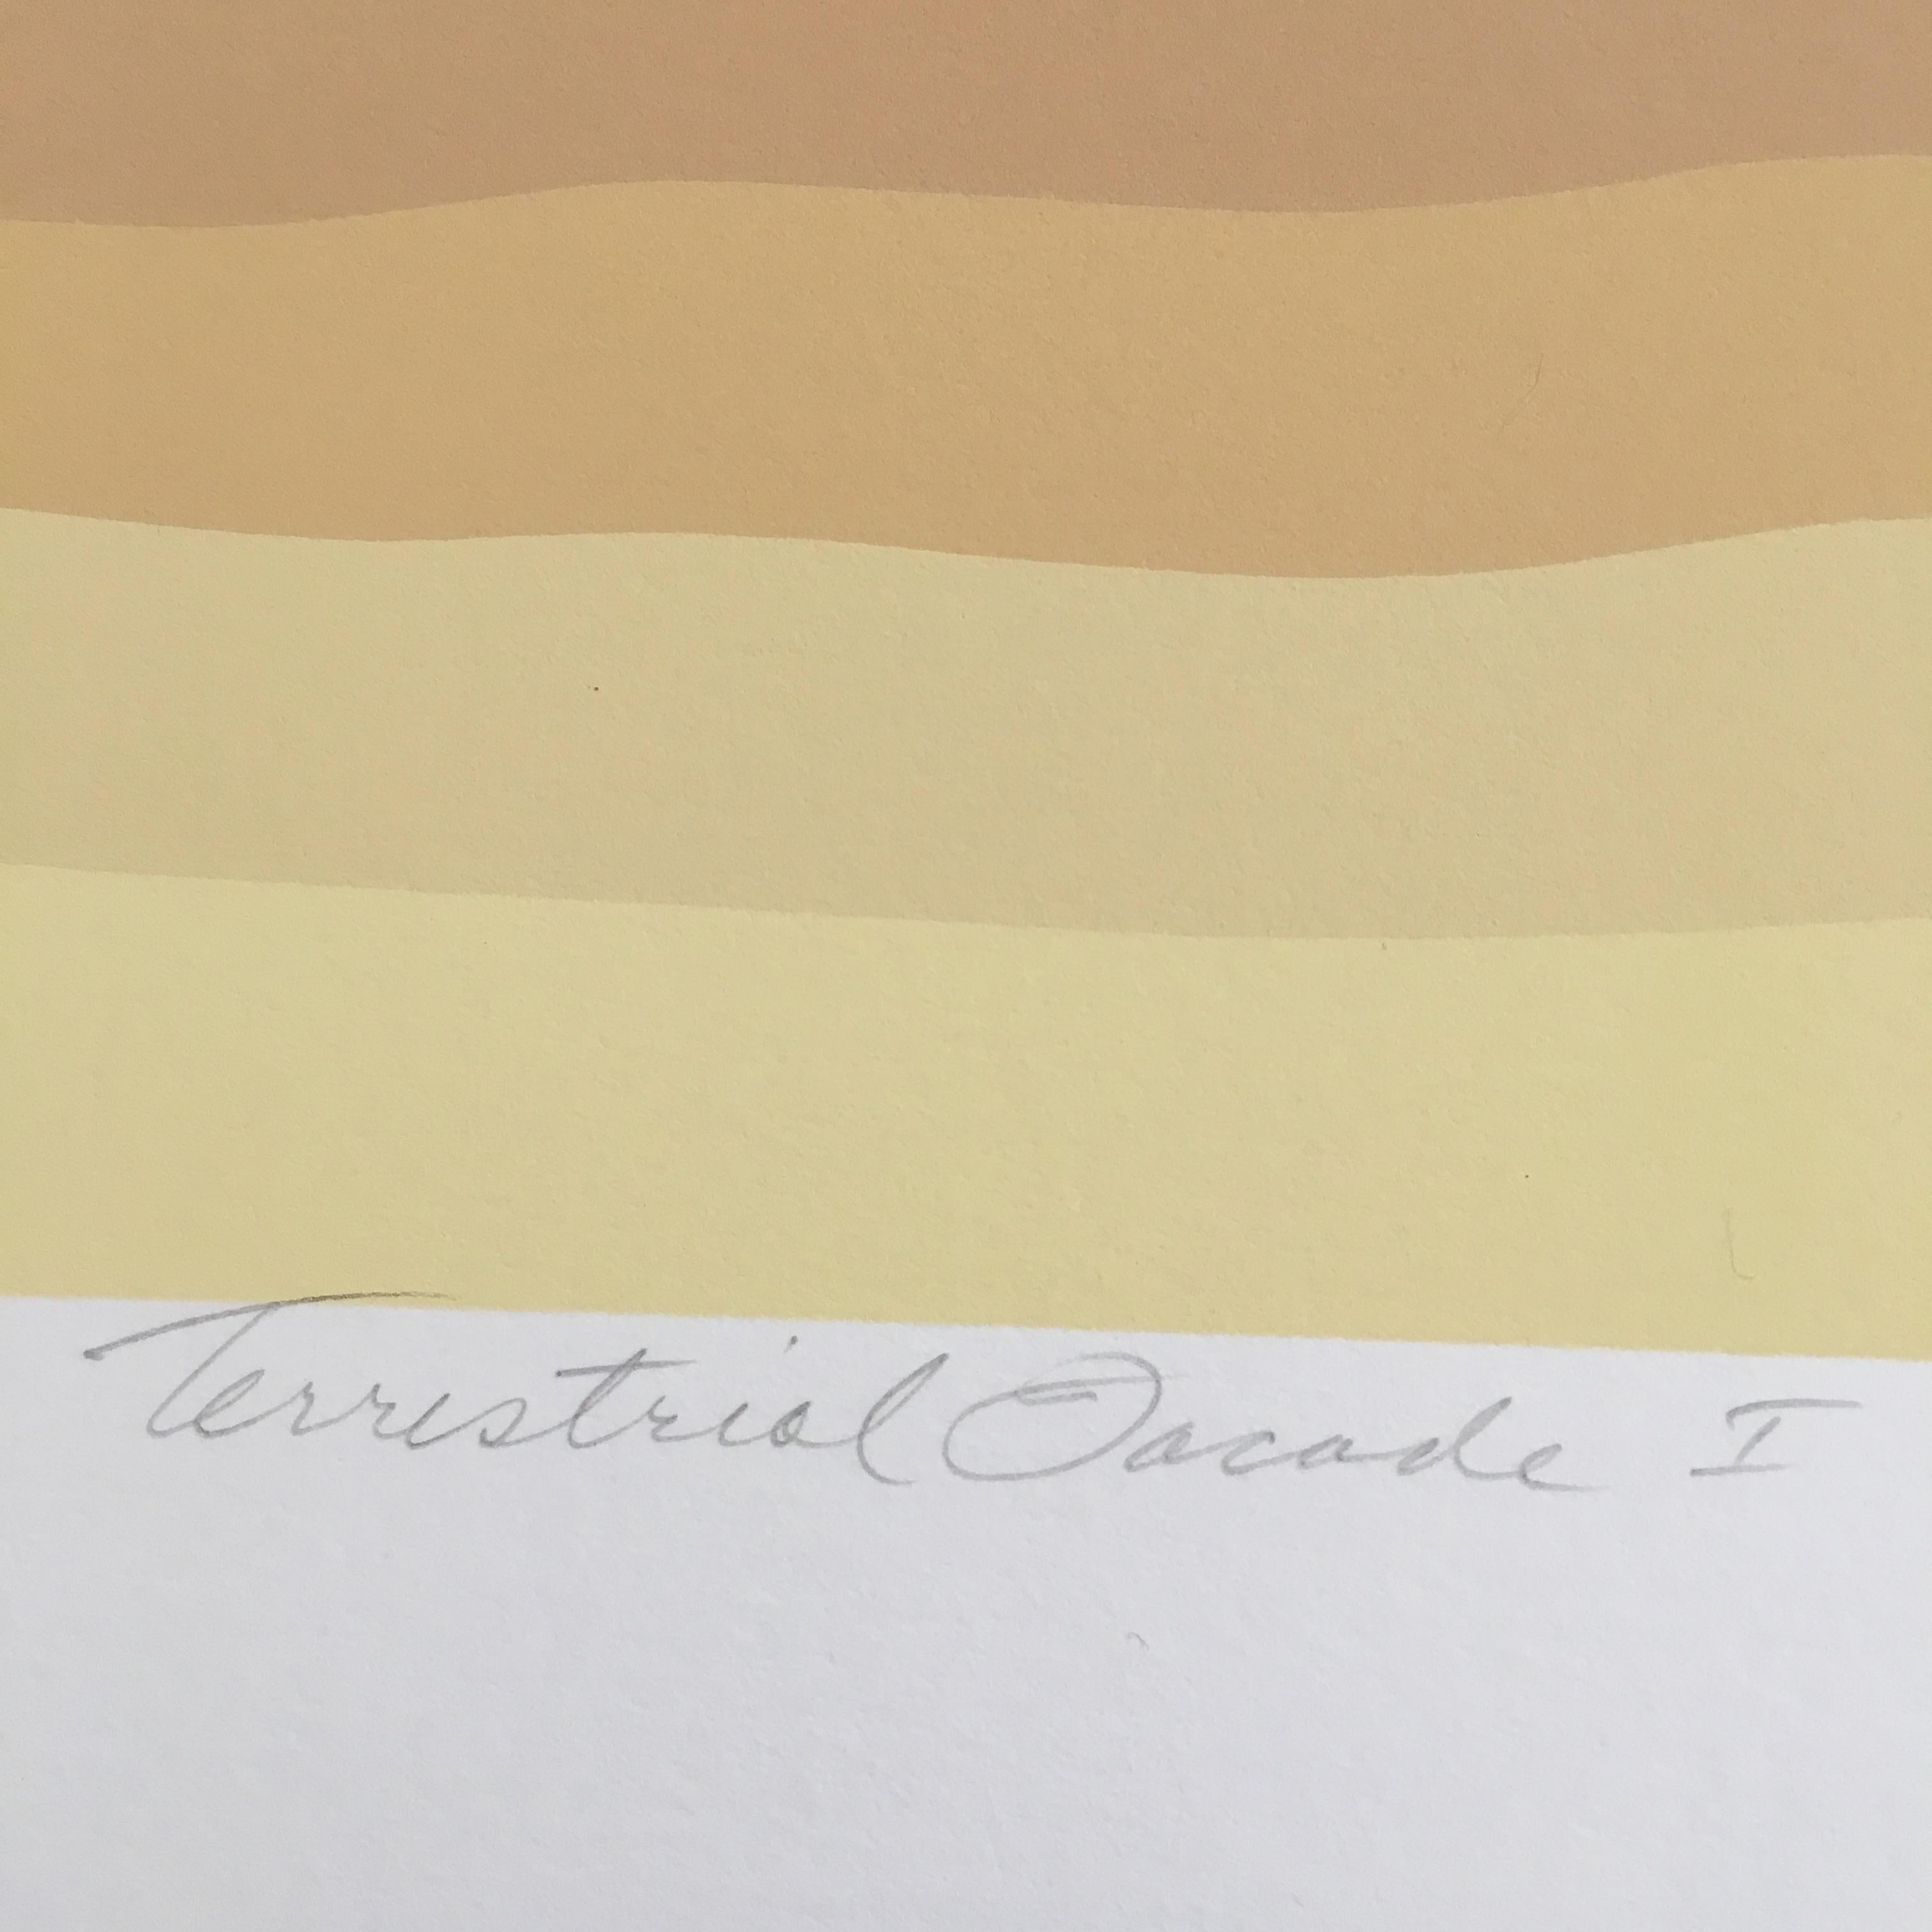 Roy Ahlgren 'Terrestrial Facade I' Signed Limited Edition Serigraph Print 3